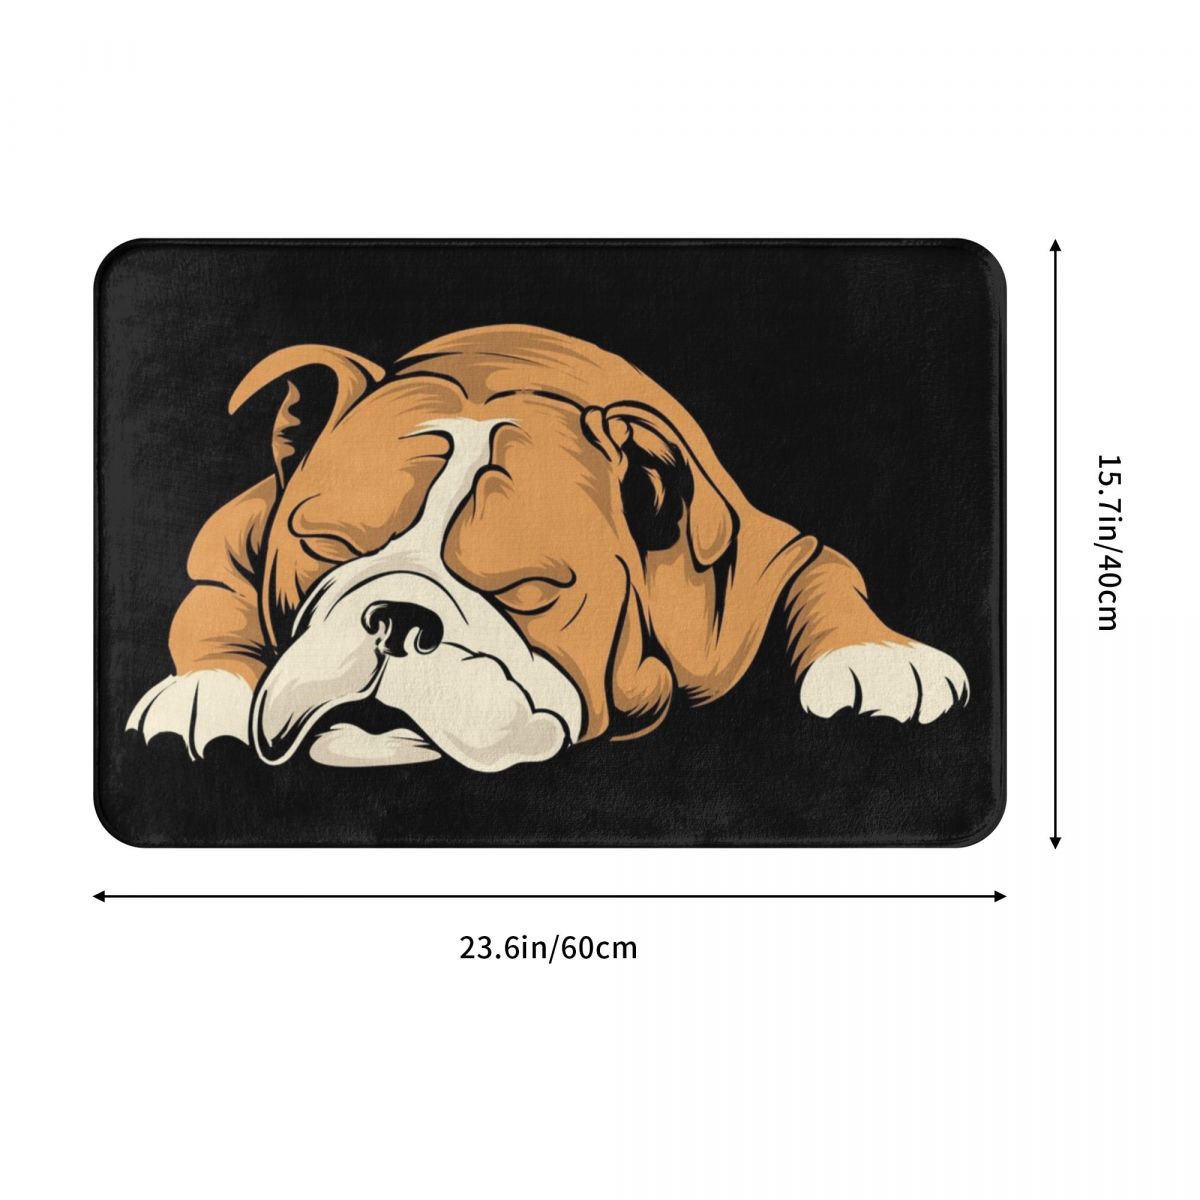 Sleeping Bulldog Doormat by Style's Bug - Style's Bug